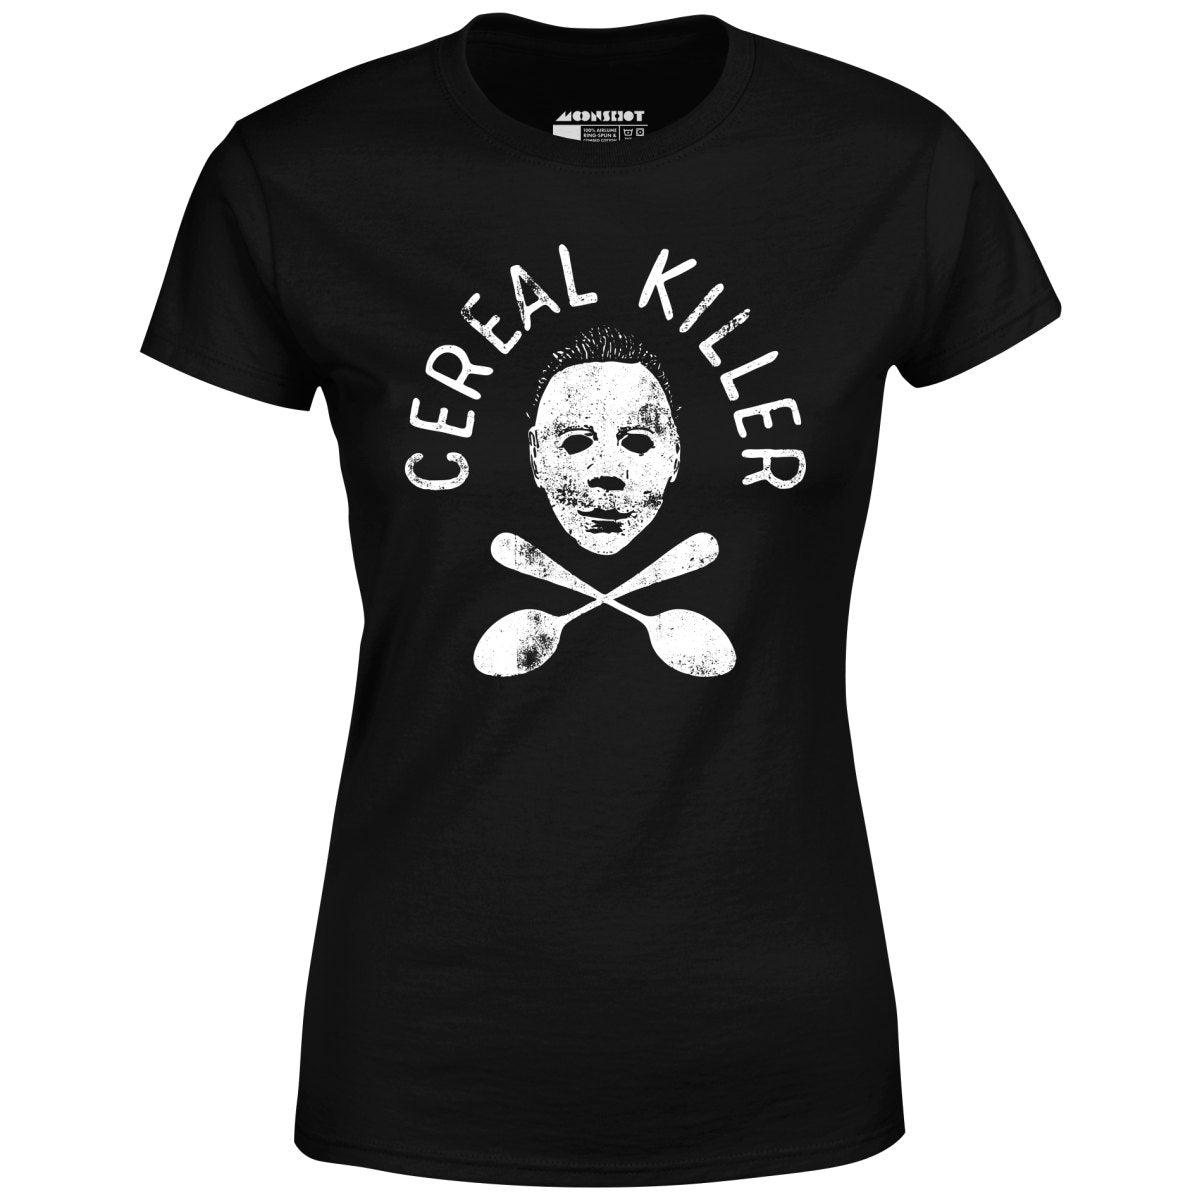 Cereal Killer Halloween - Women's T-Shirt